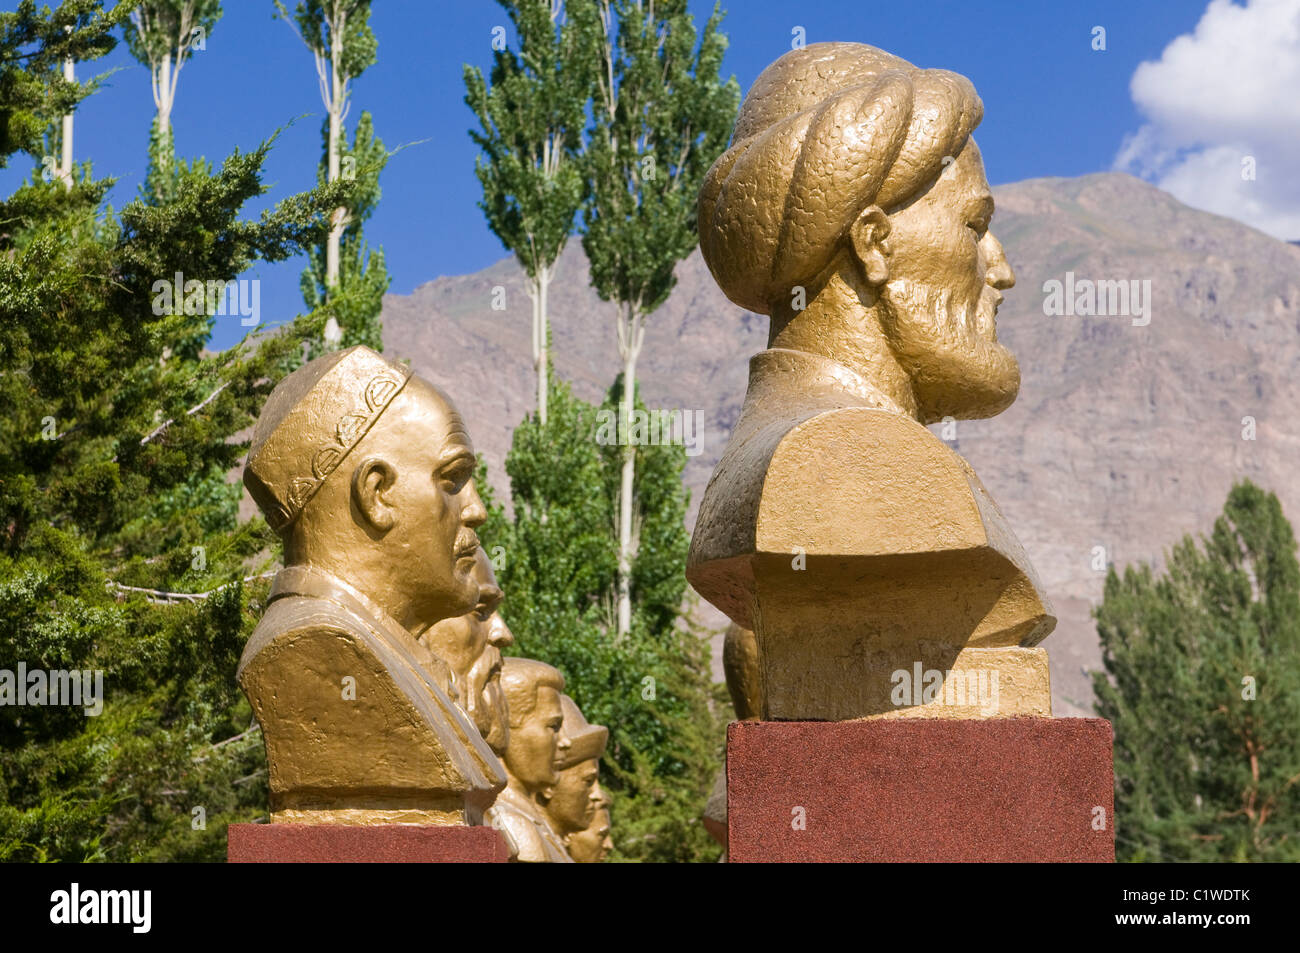 Le Tadjikistan, Pamir, Khorog, golden bustes d'hommes célèbres Banque D'Images